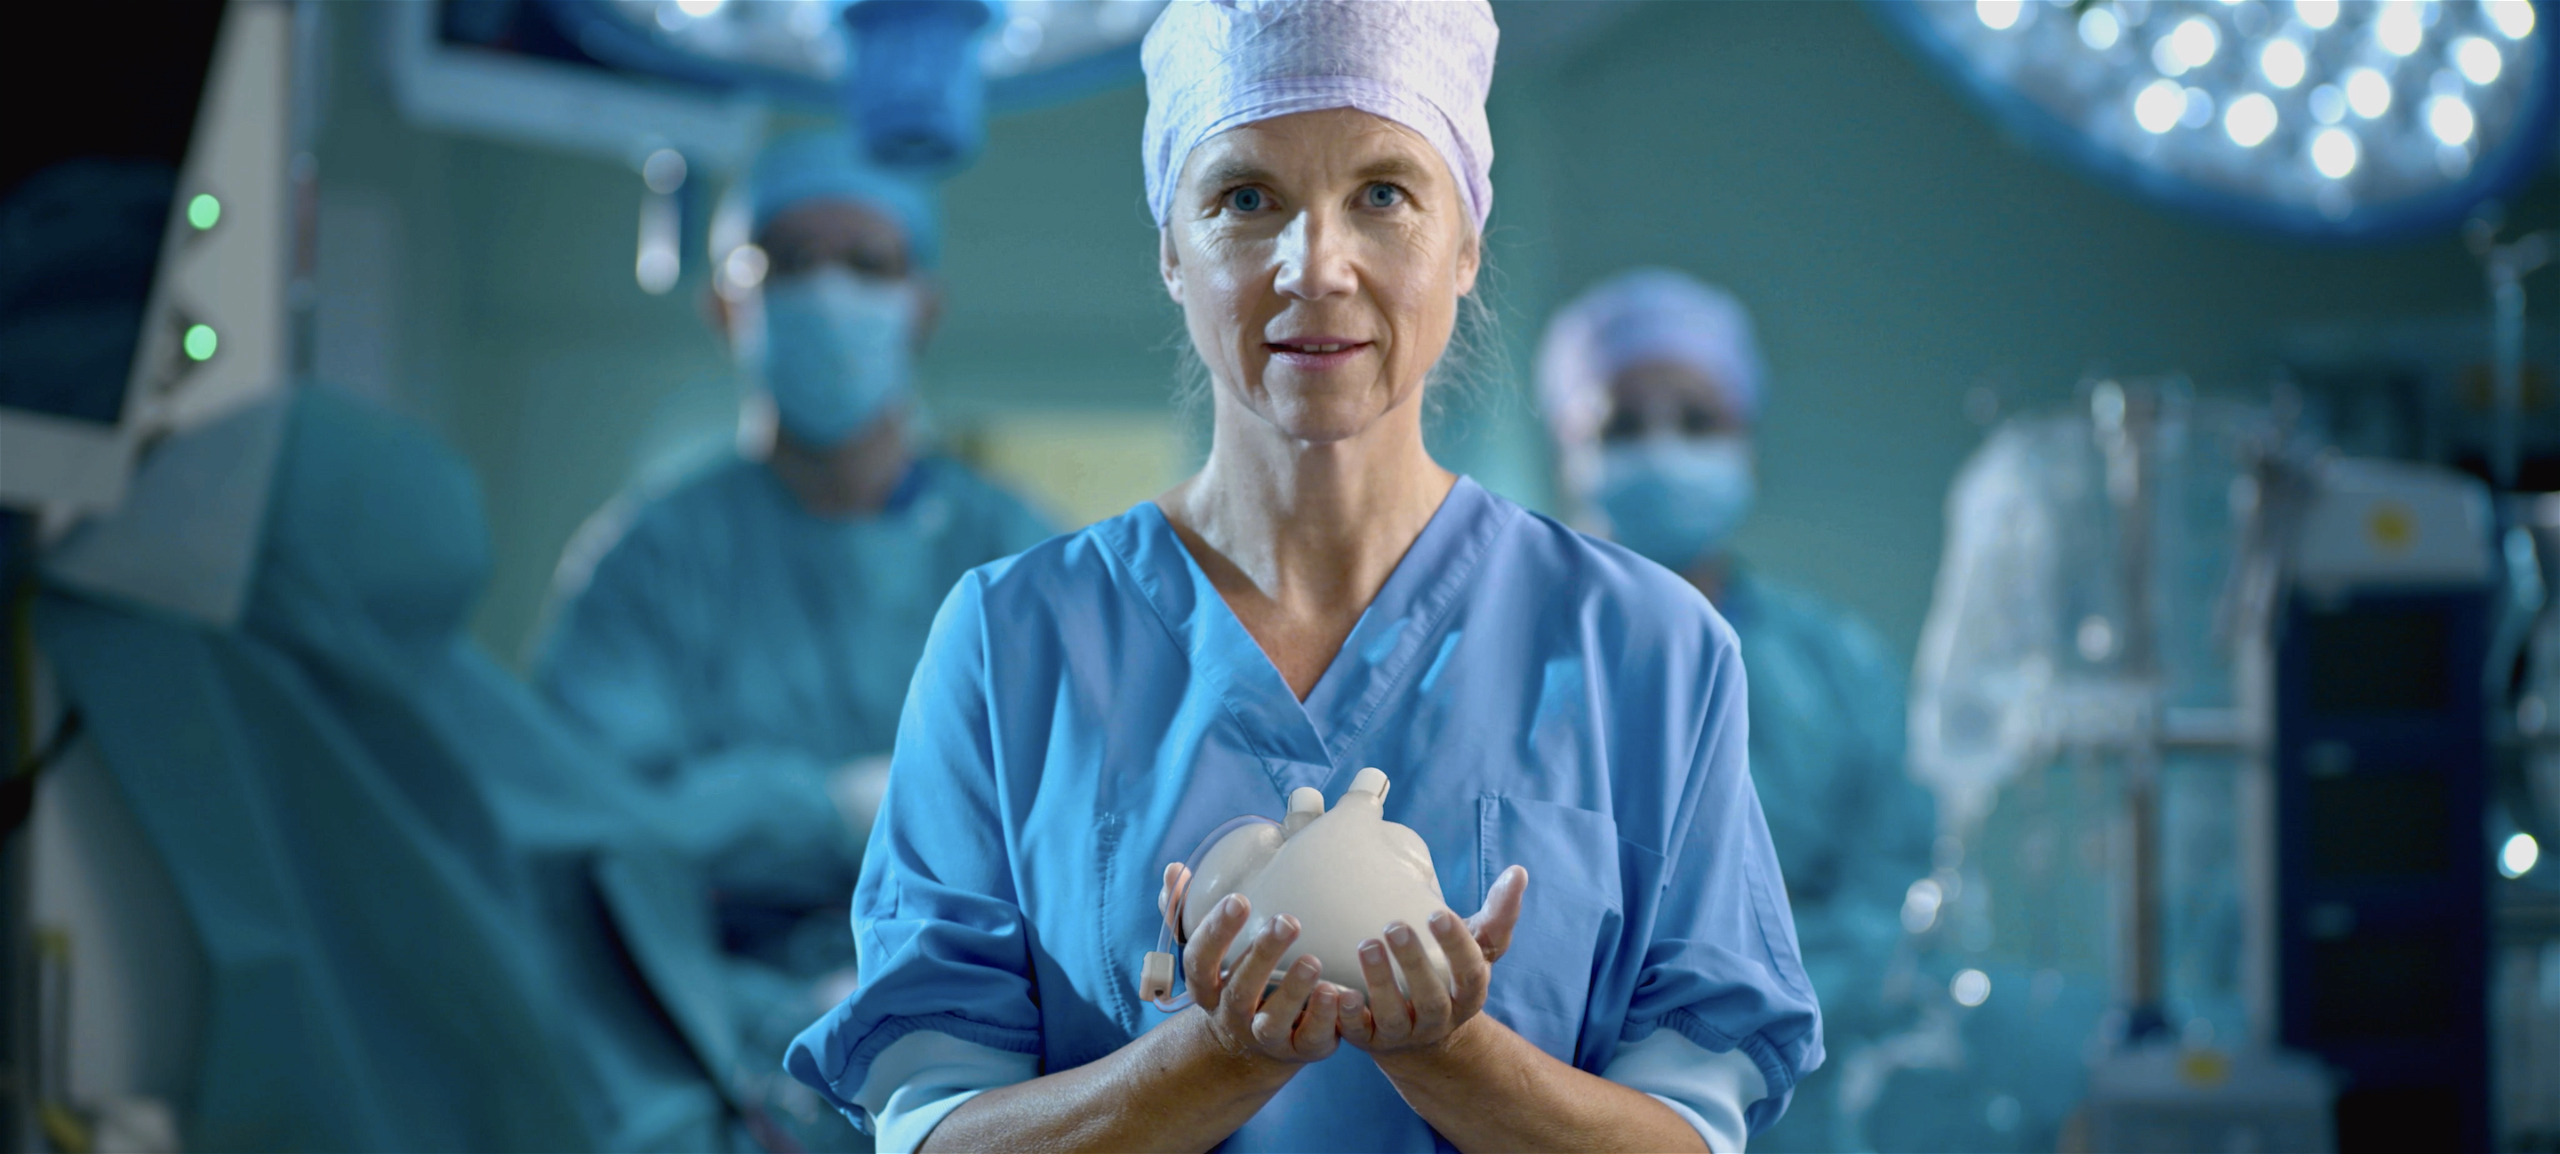 Heart Surgeon Jolanda Kluin holding hybrid heart.png